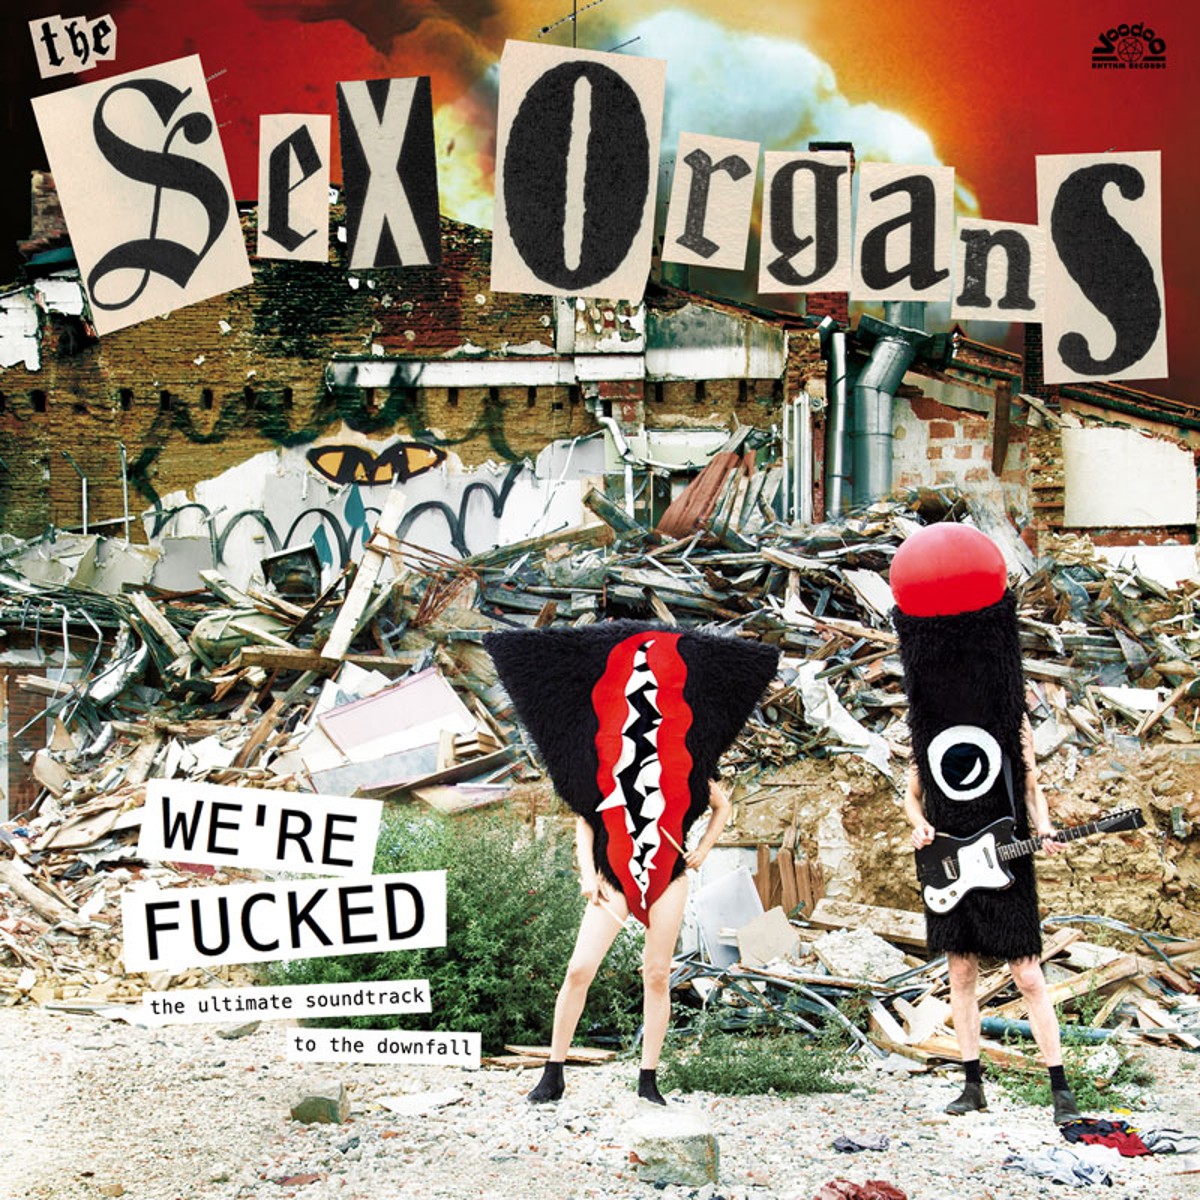 The Sex Organs ‘We’re Fucked’ album artwork